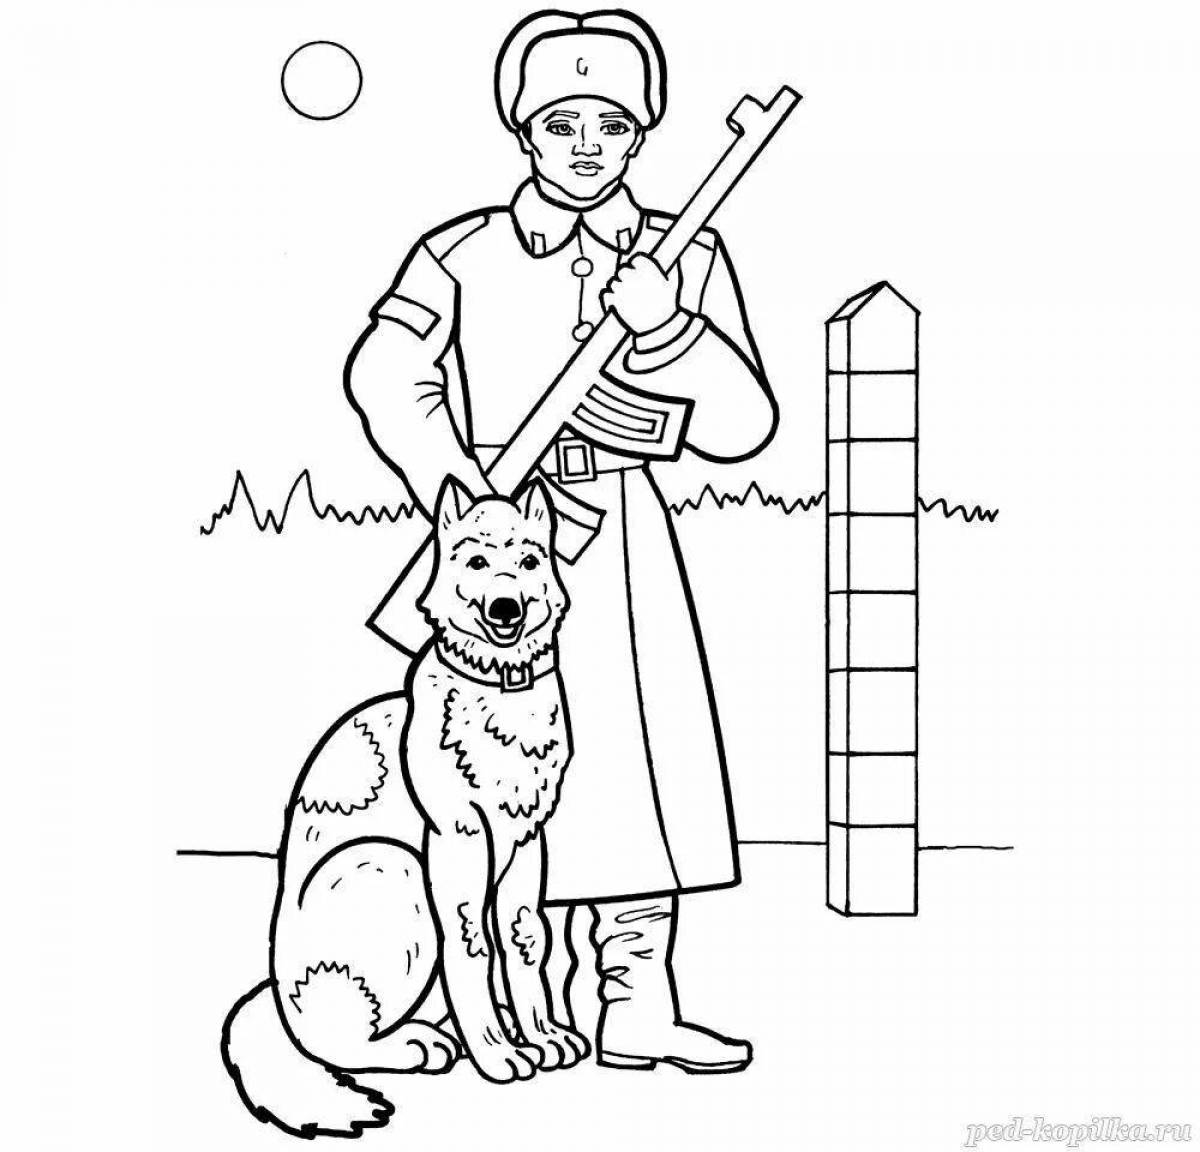 Shining border guard with dog